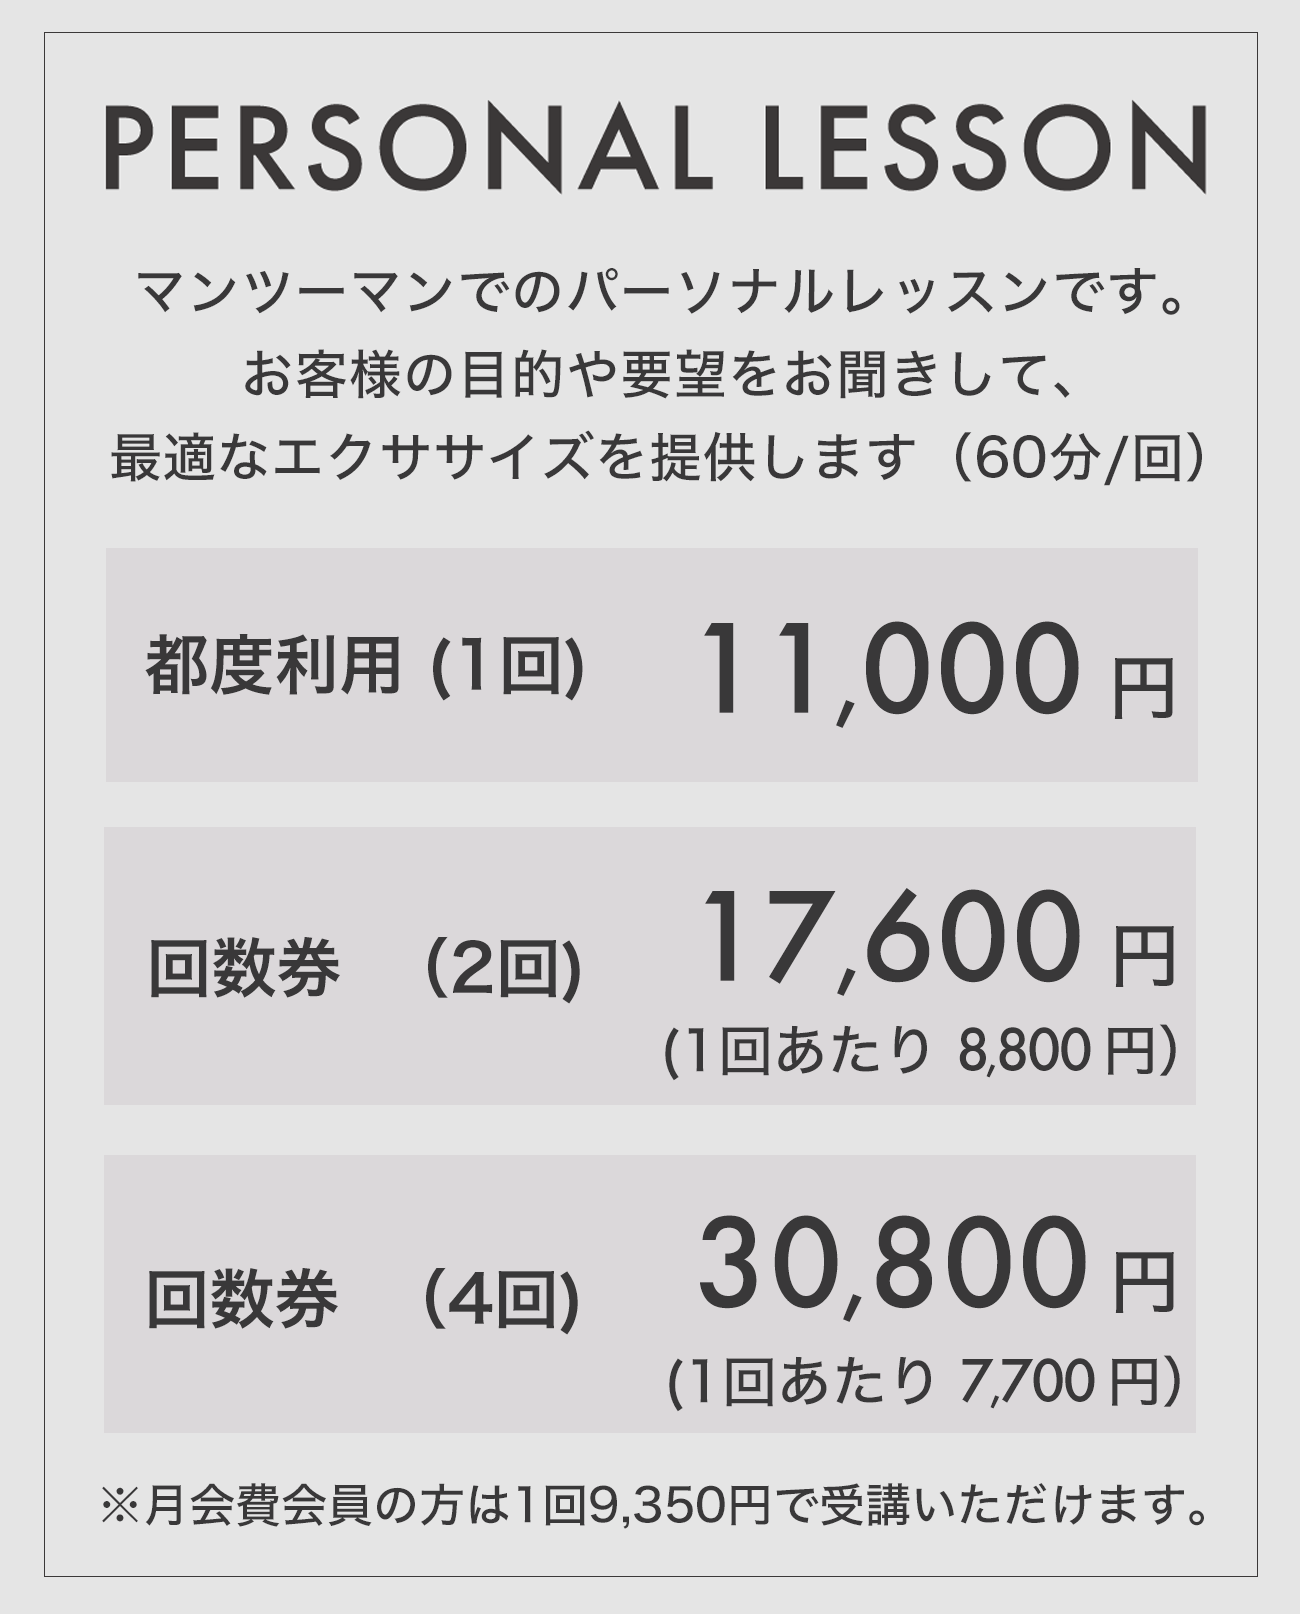 PERSONAL LESSON マンツーマンでのパーソナルレッスンも承ります。11,000円/回（60分）